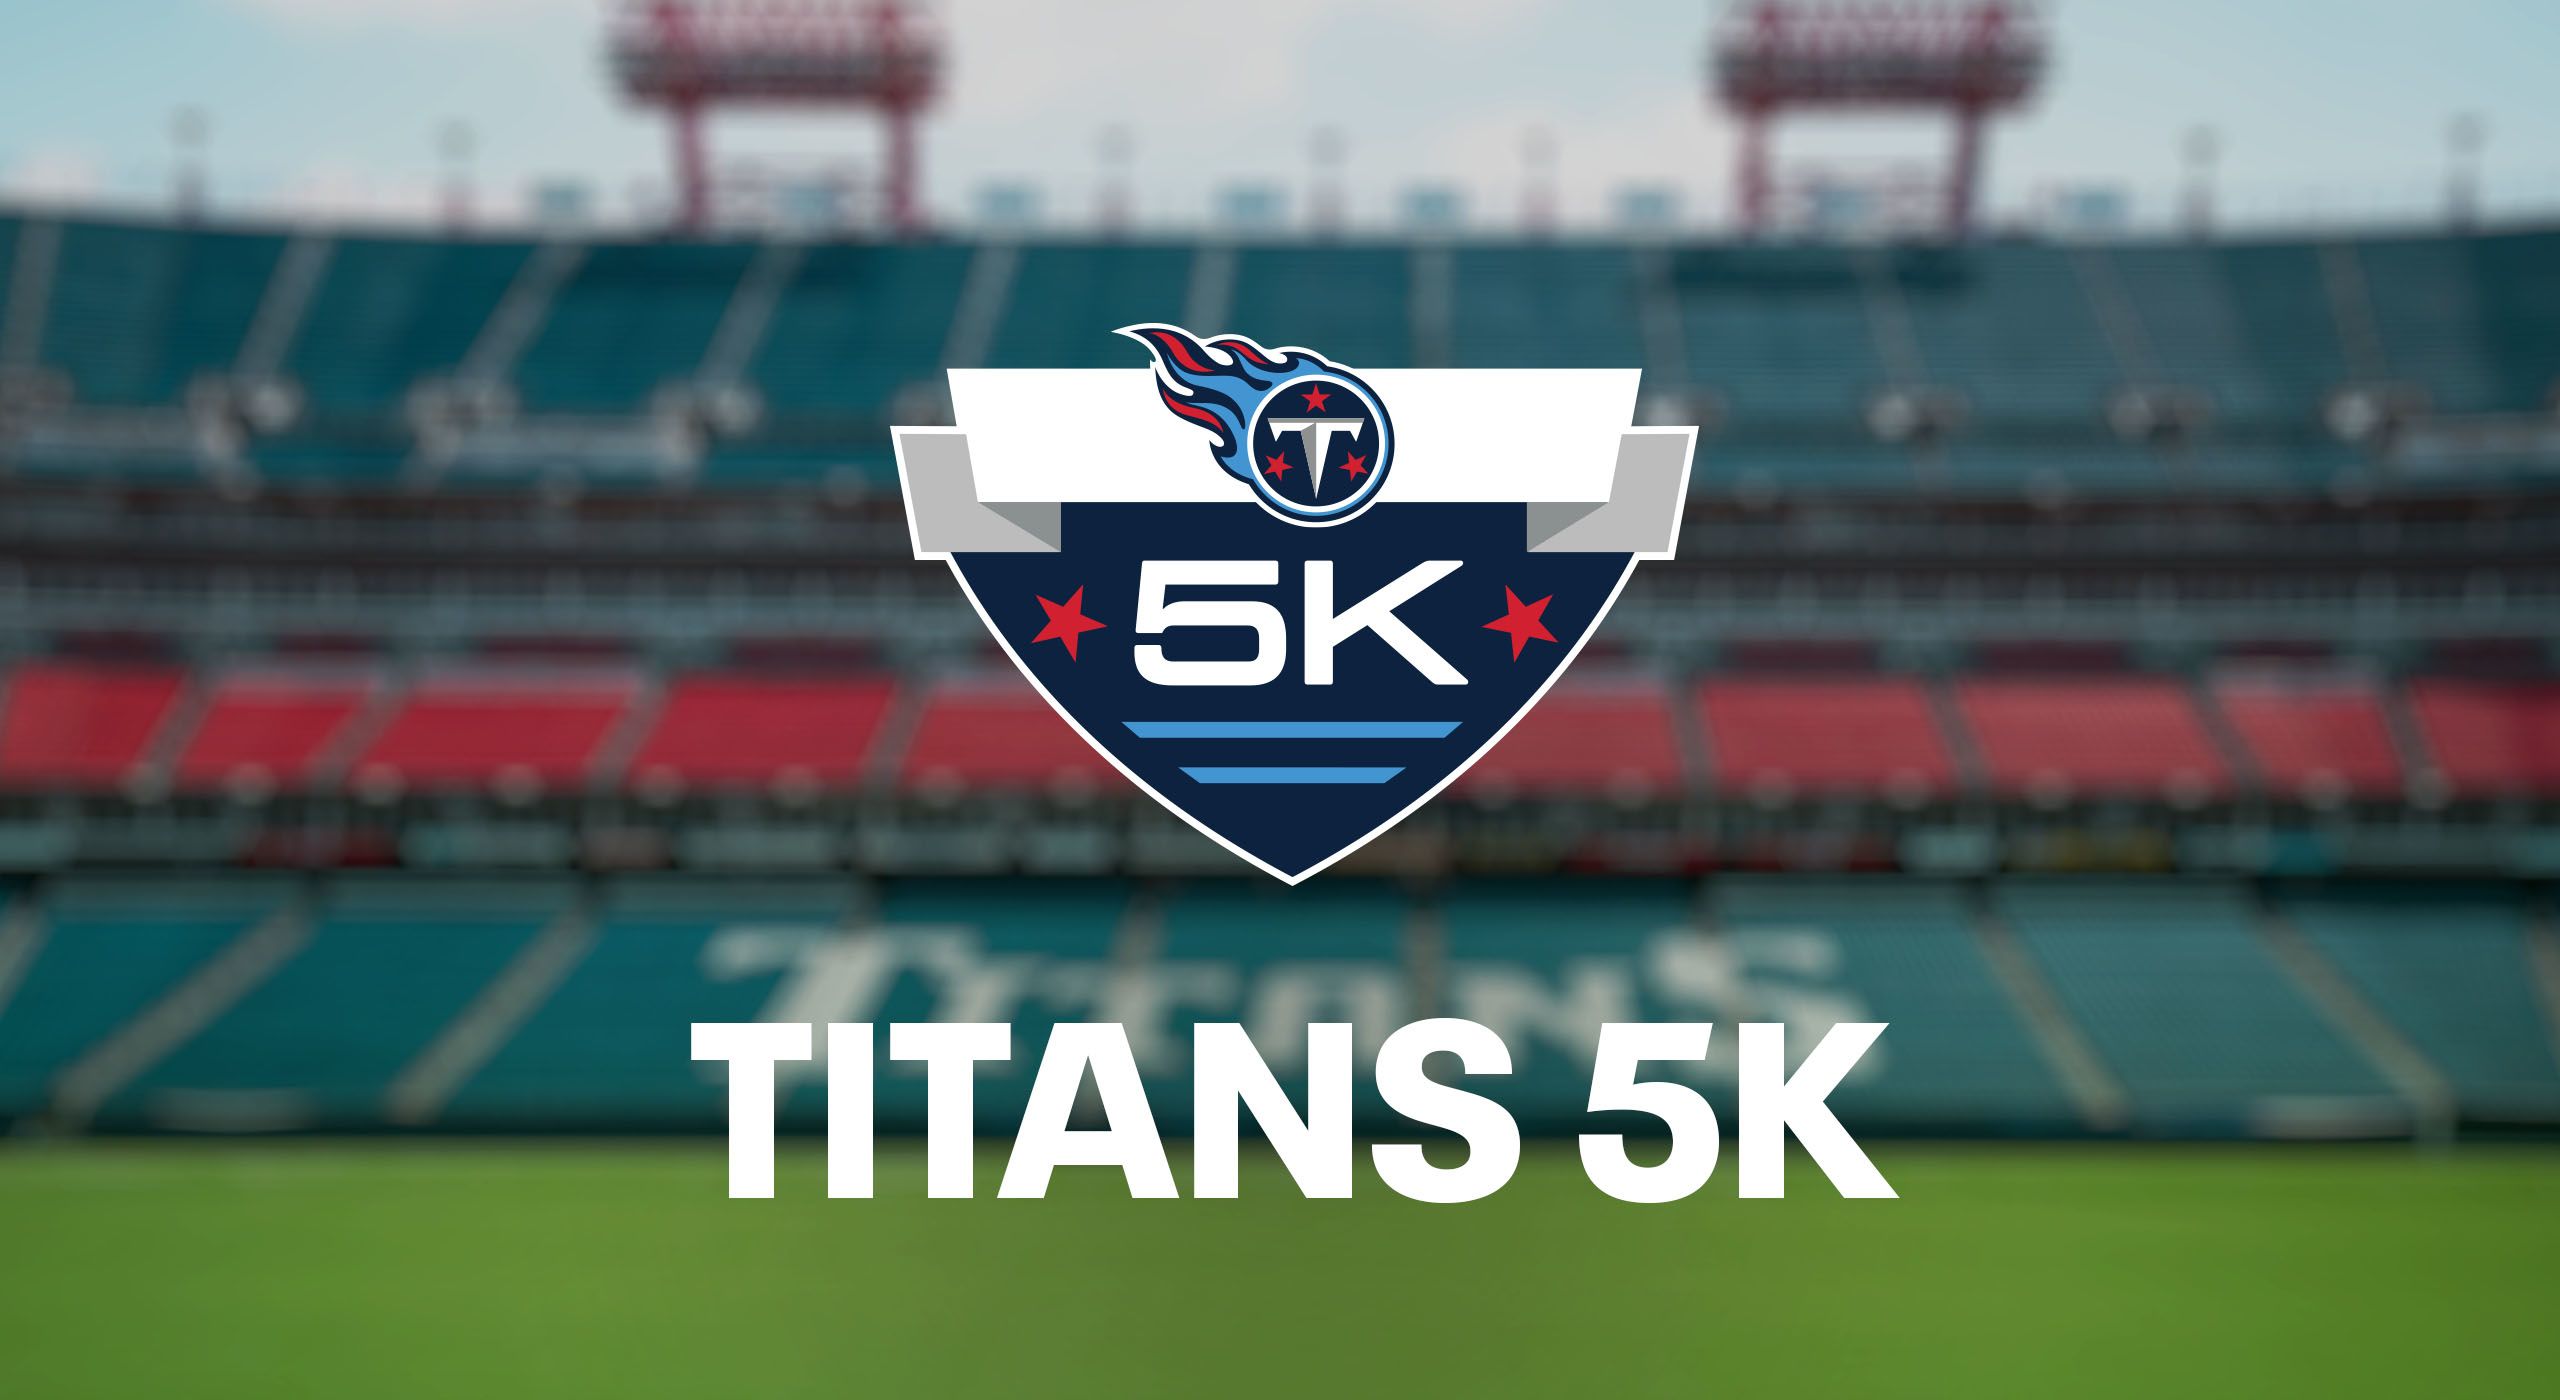 Titans 5k Tennessee Titans Tennesseetitans Com